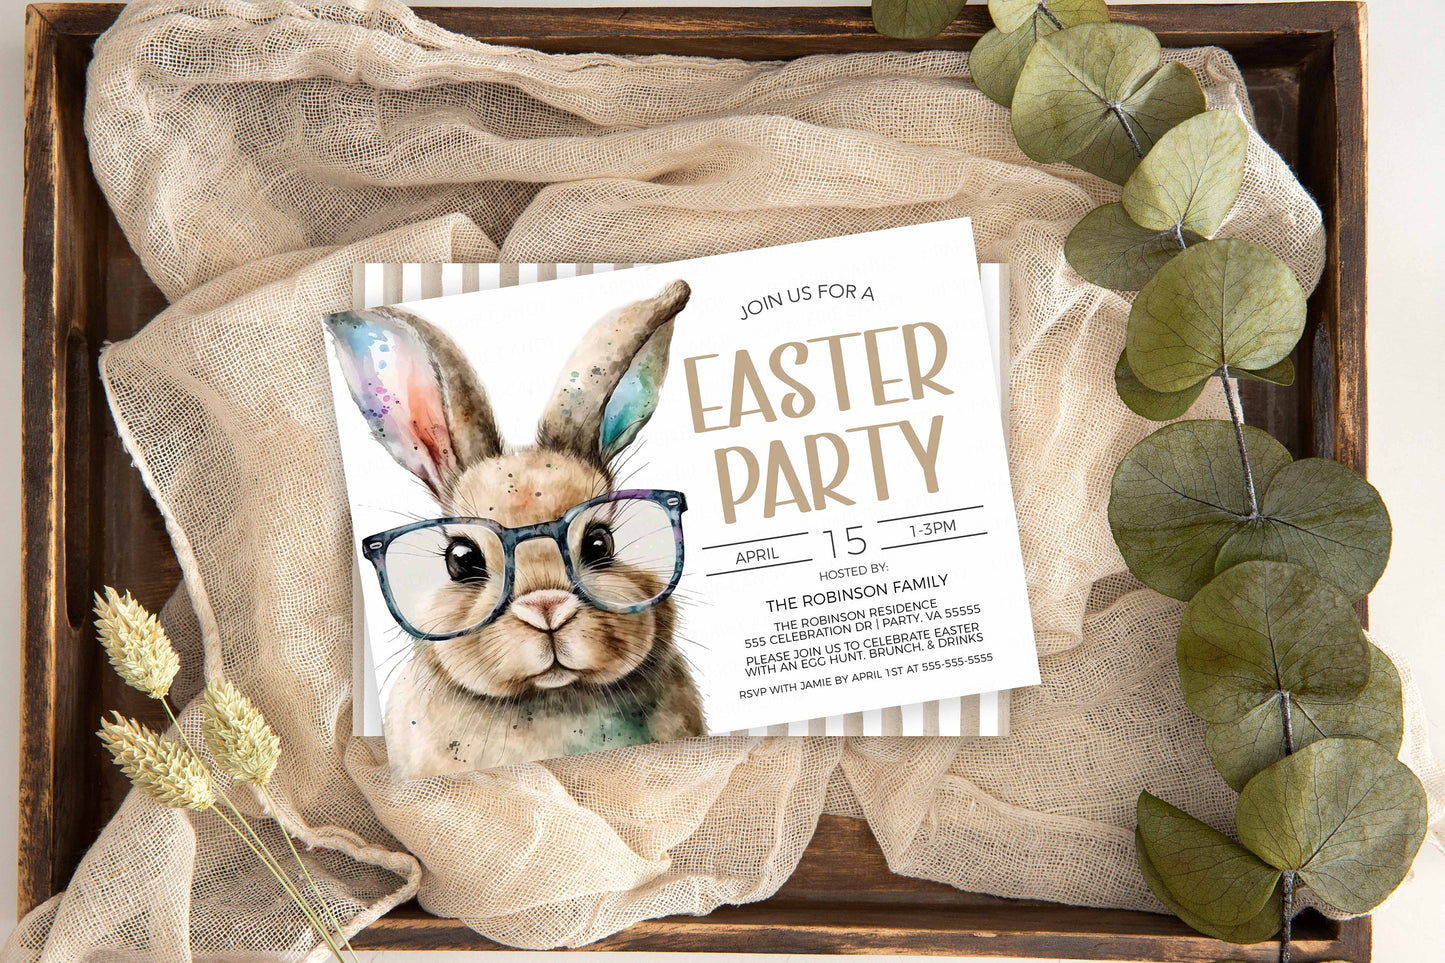 Easter Party Invitation, Easter Egg Hunt Invite, Kids Easter Party, Easter Breakfast Brunch Lunch Dinner Party, Editable Printable Template